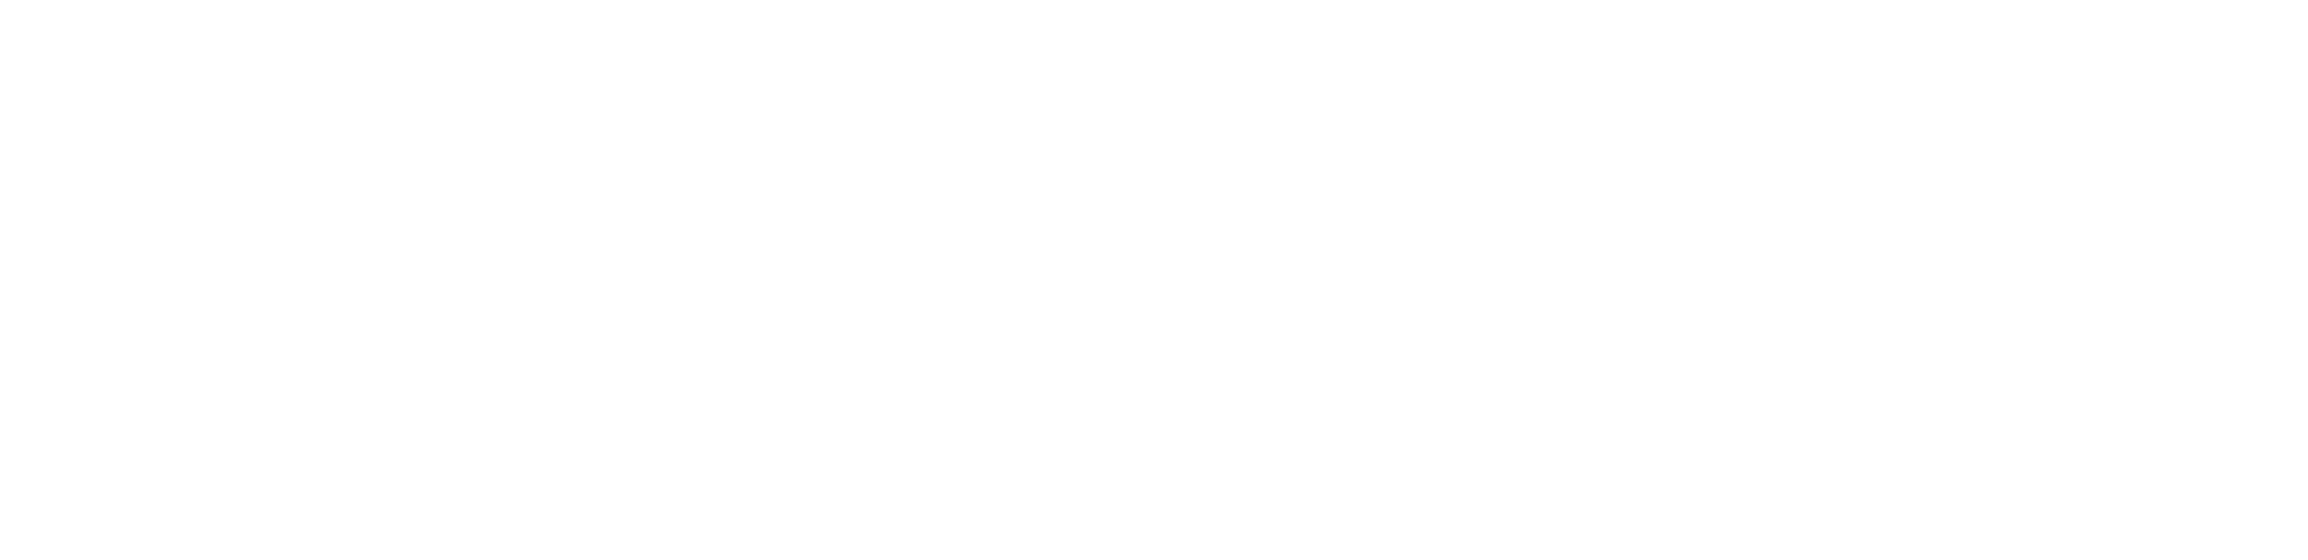 NBN Atlas of Northern Ireland